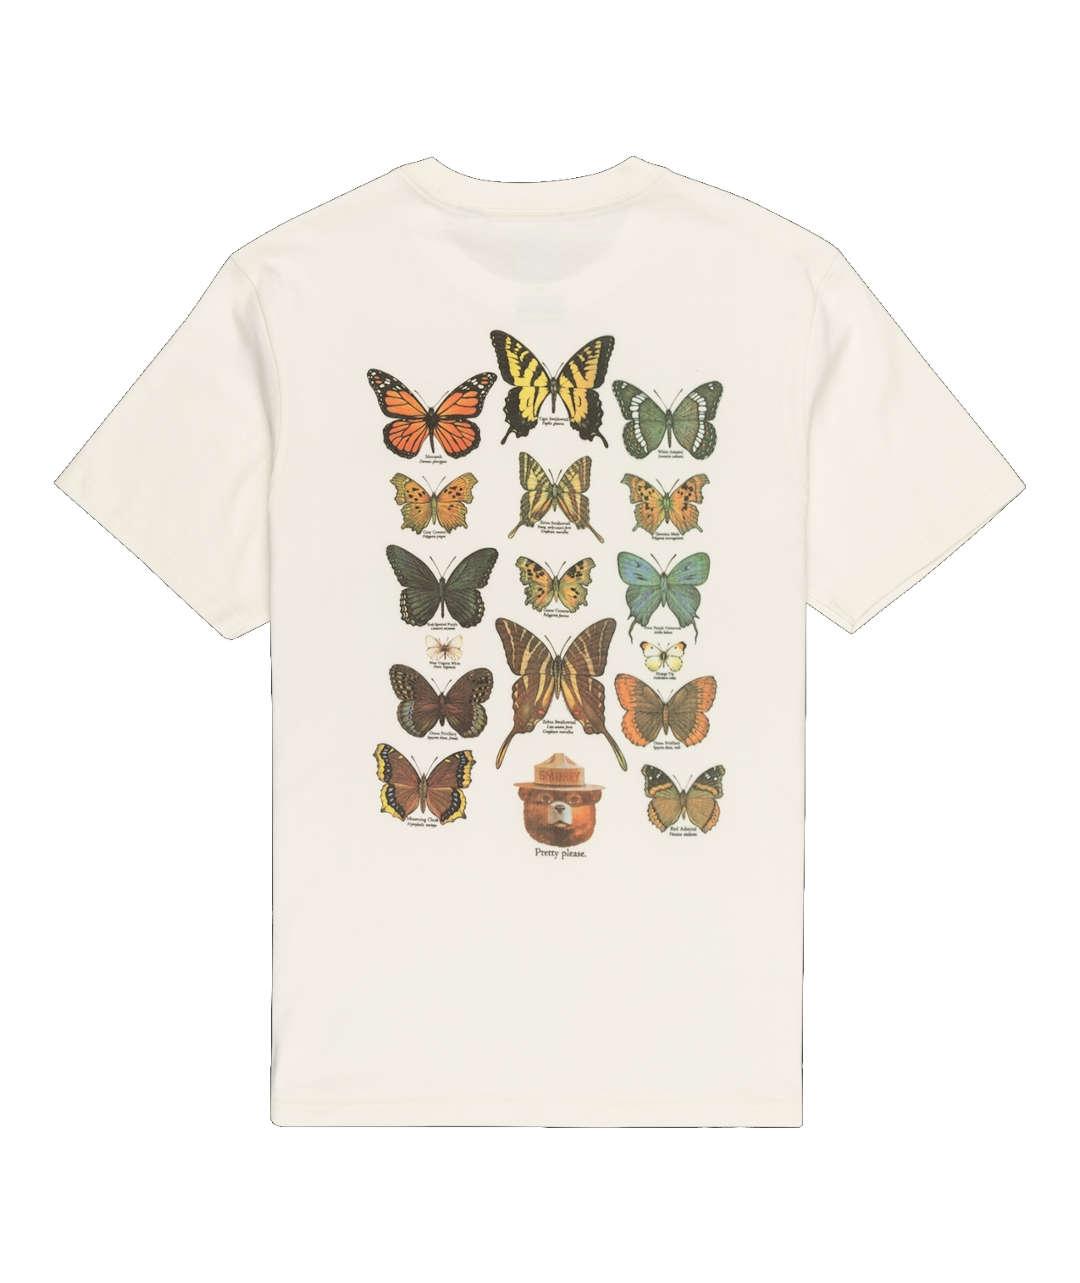 Camiseta Element x Smokey Bear Butterflies